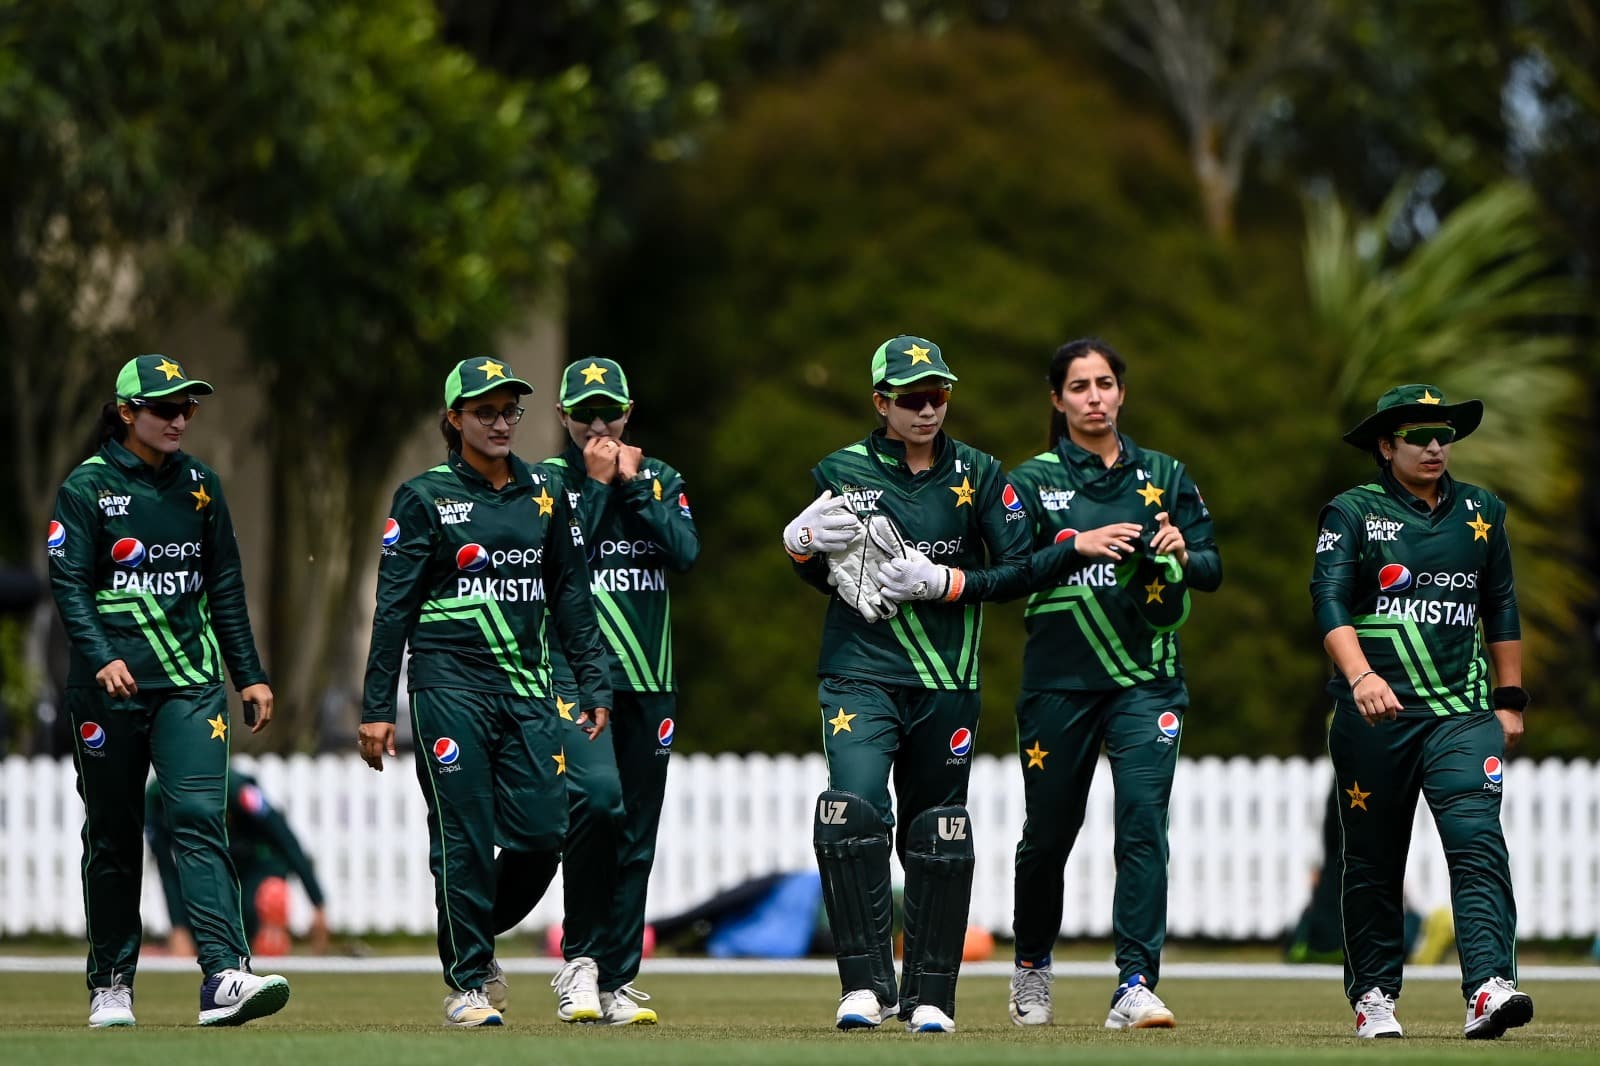 Pakistan Women’s Team Defeats New Zealand XI